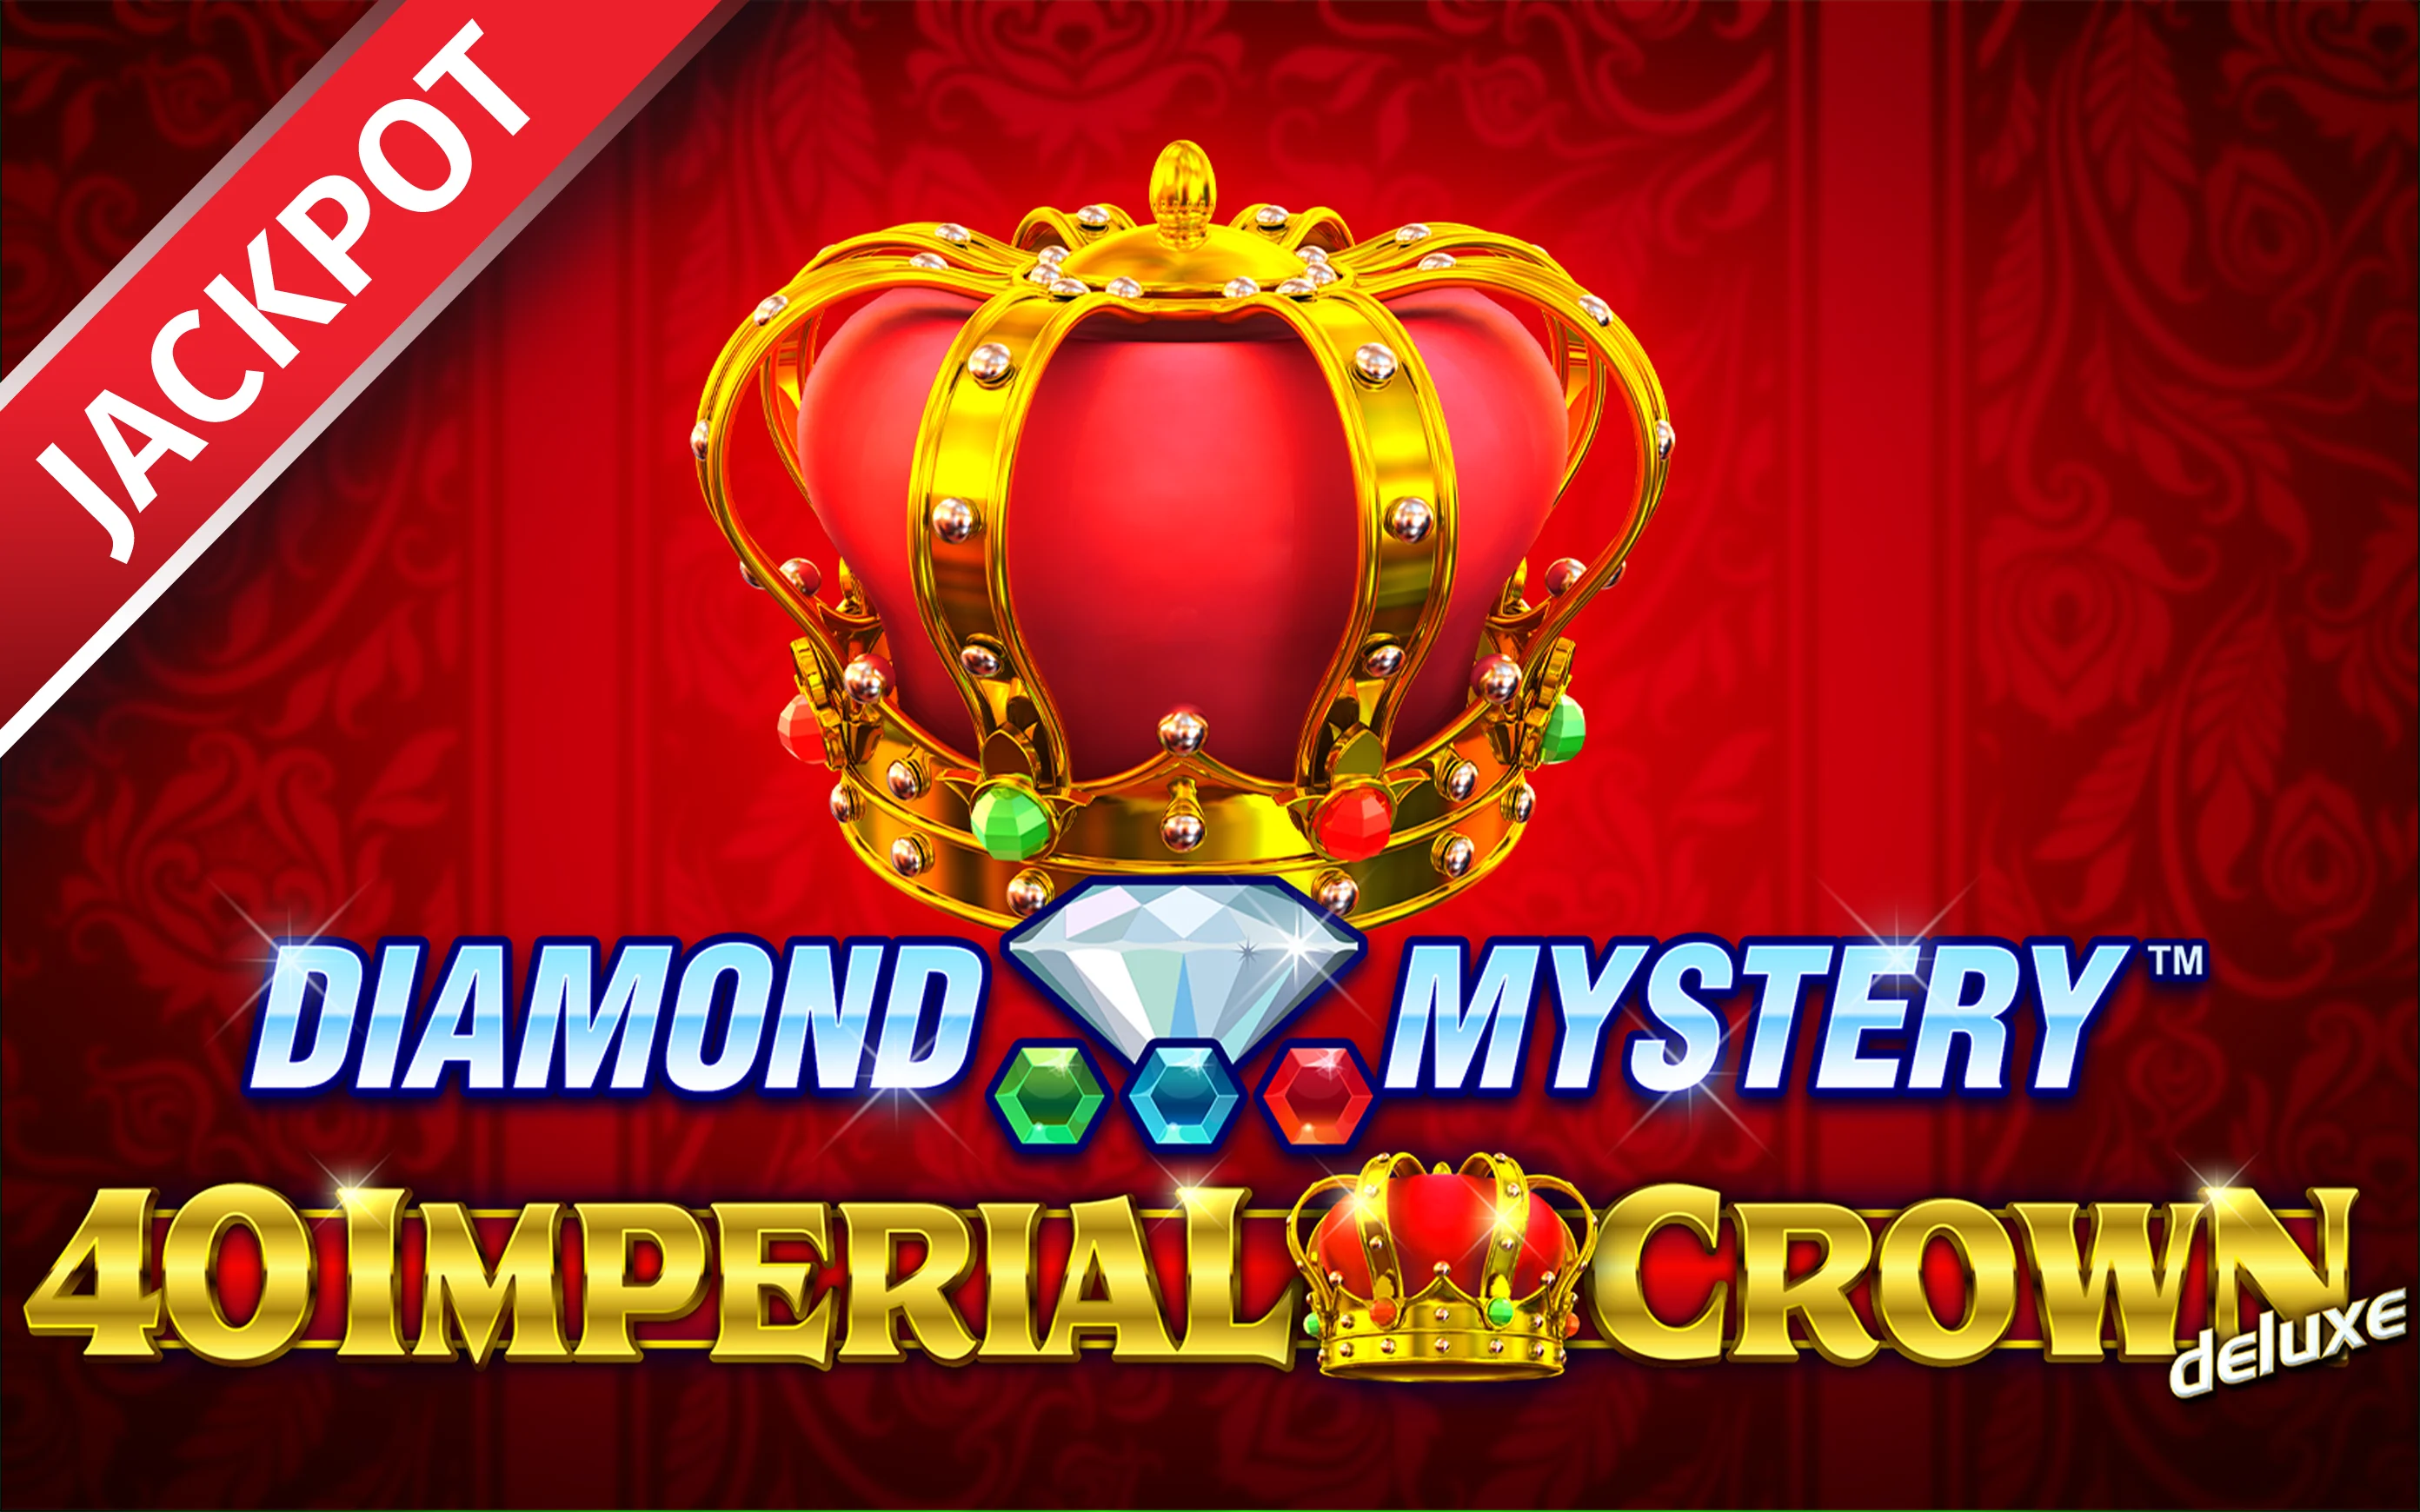 Spil Diamond Mystery™ – 40 Imperial Crown deluxe på Starcasino.be online kasino
